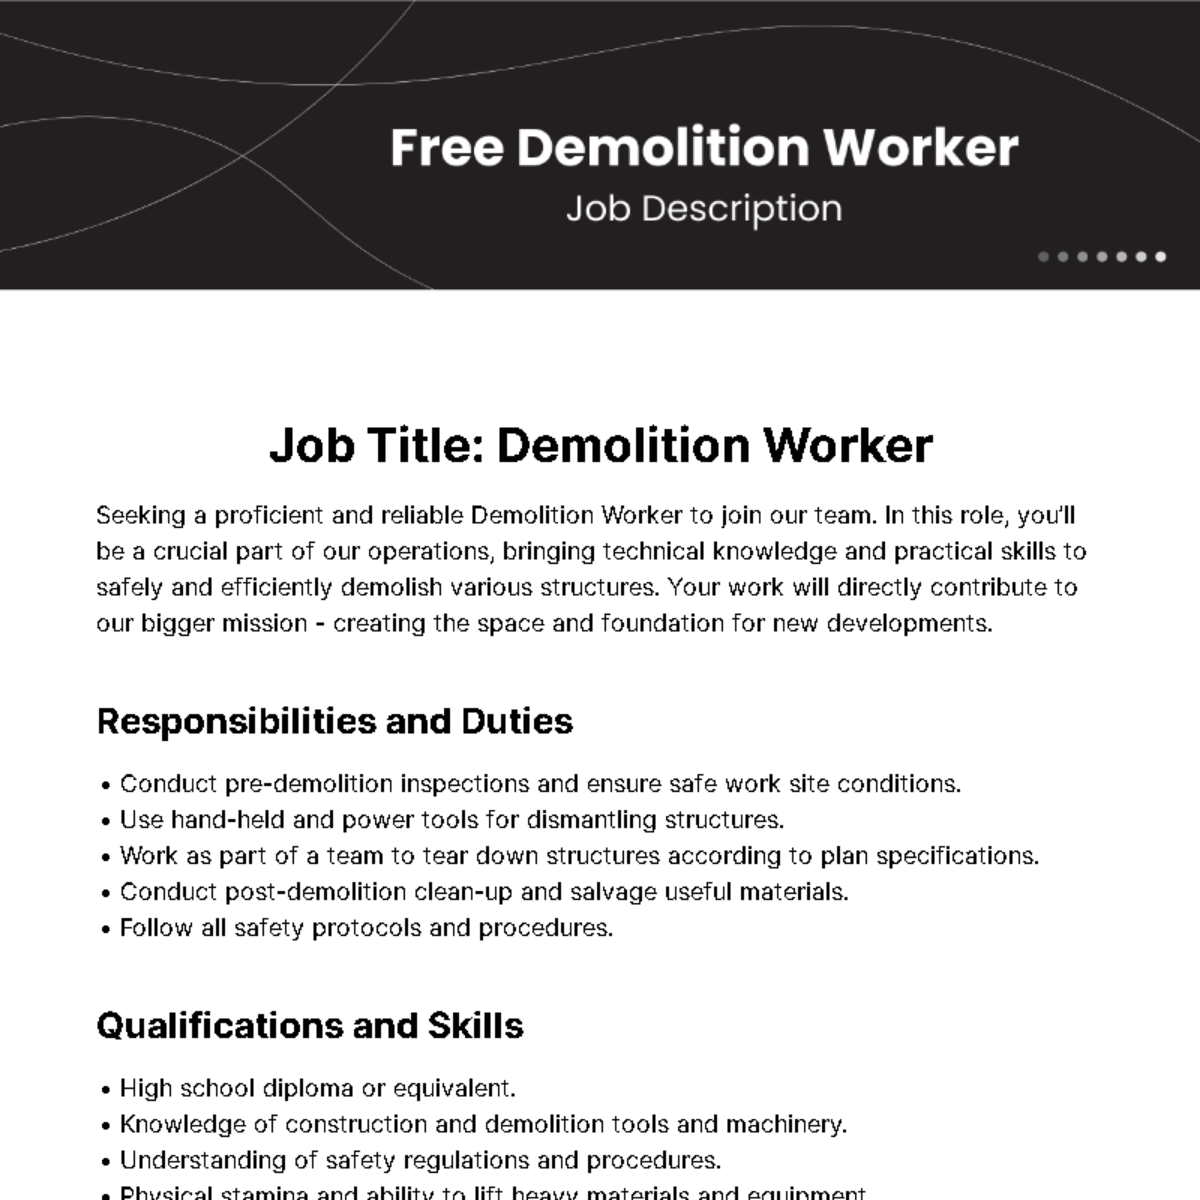 Free Demolition Worker Job Description Template